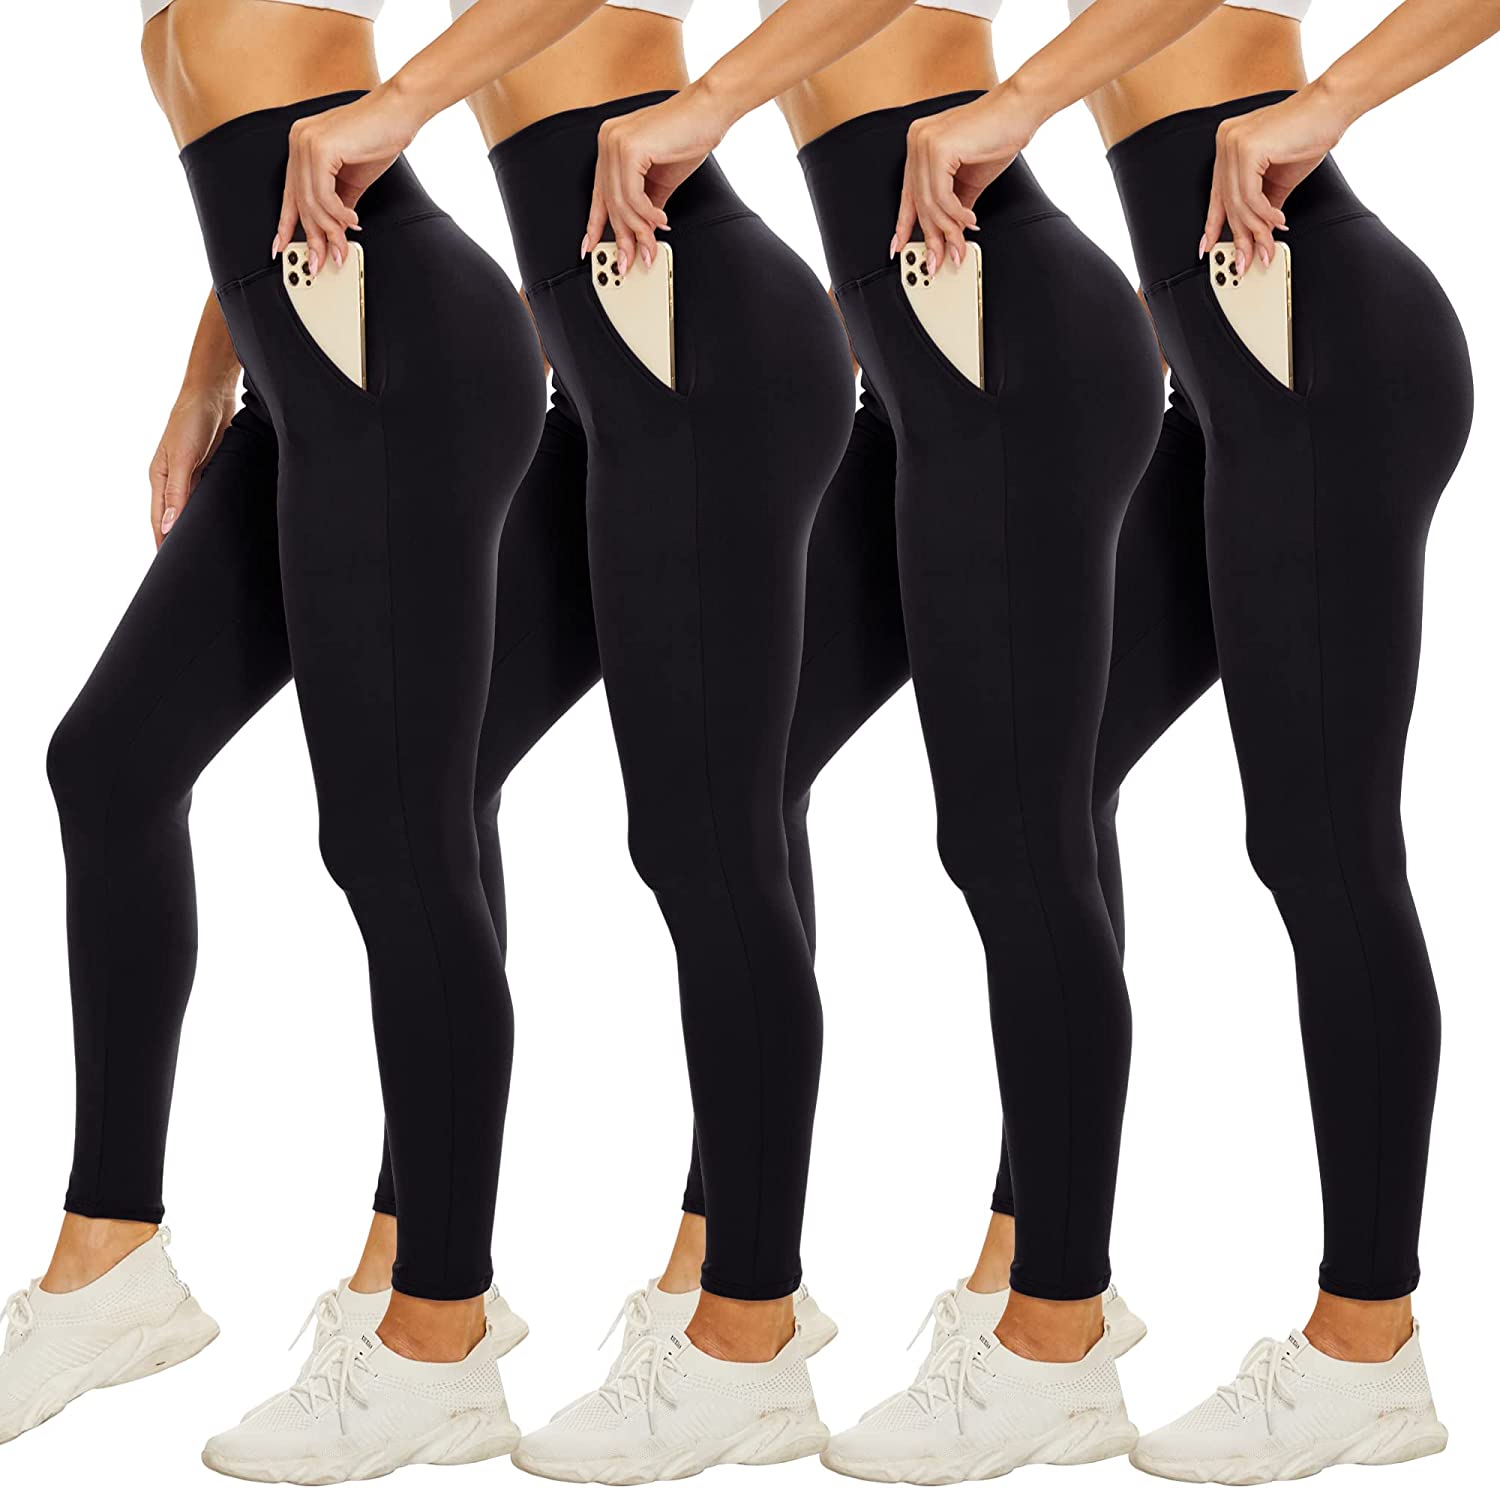 Buy CAMPSNAIL 4 Pack High Waisted Leggings for Women- Soft Tummy